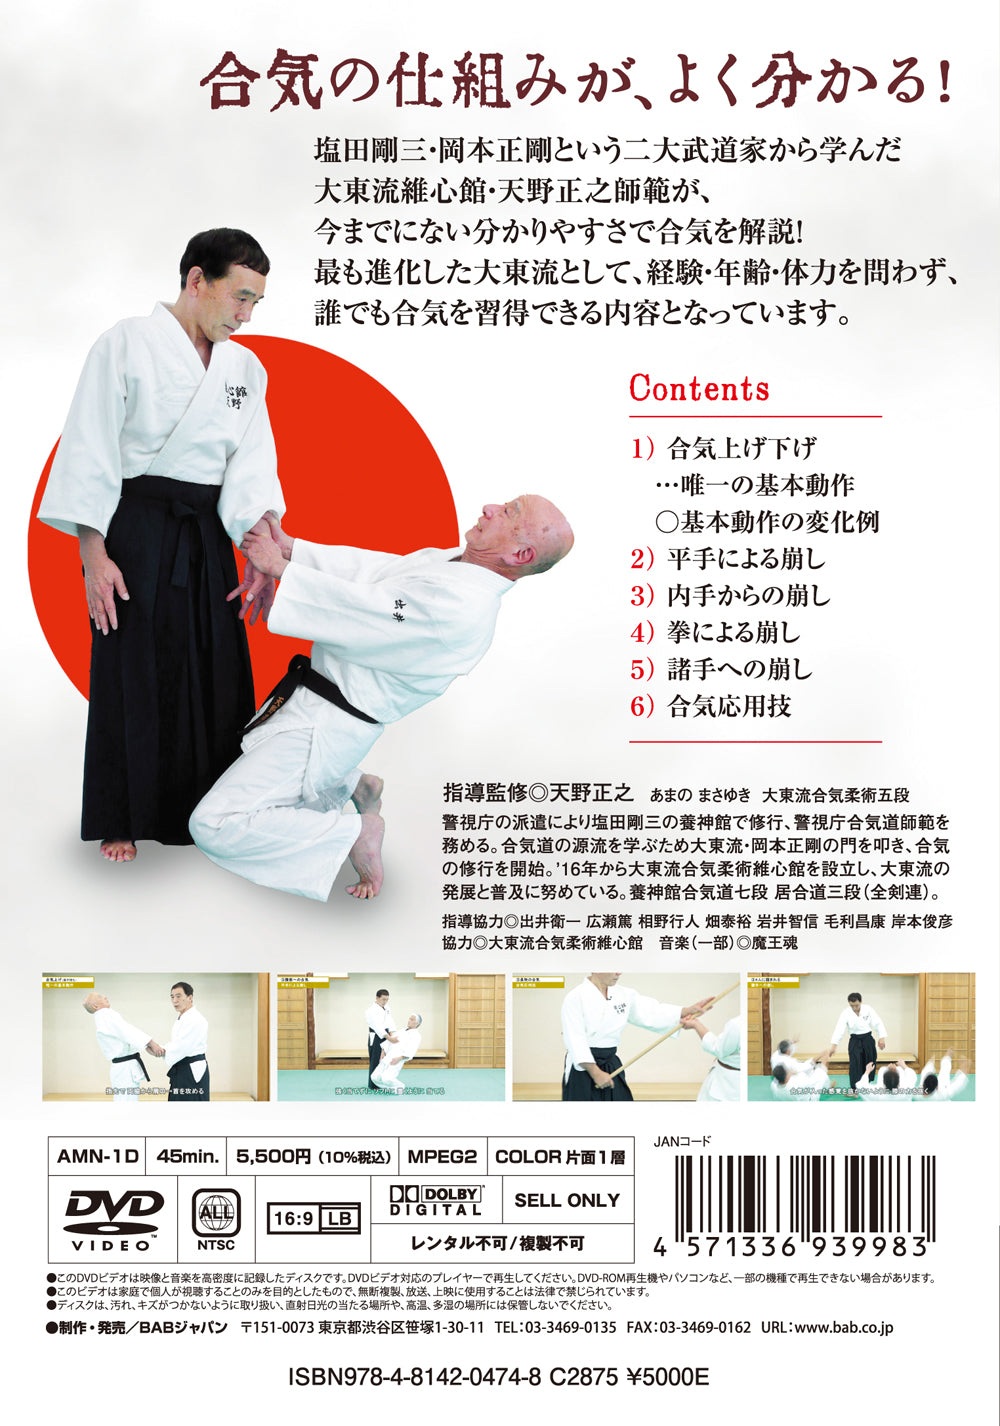 How to Apply Aiki in Daito Ryu Aikijujutsu DVD by Masayuki Amano